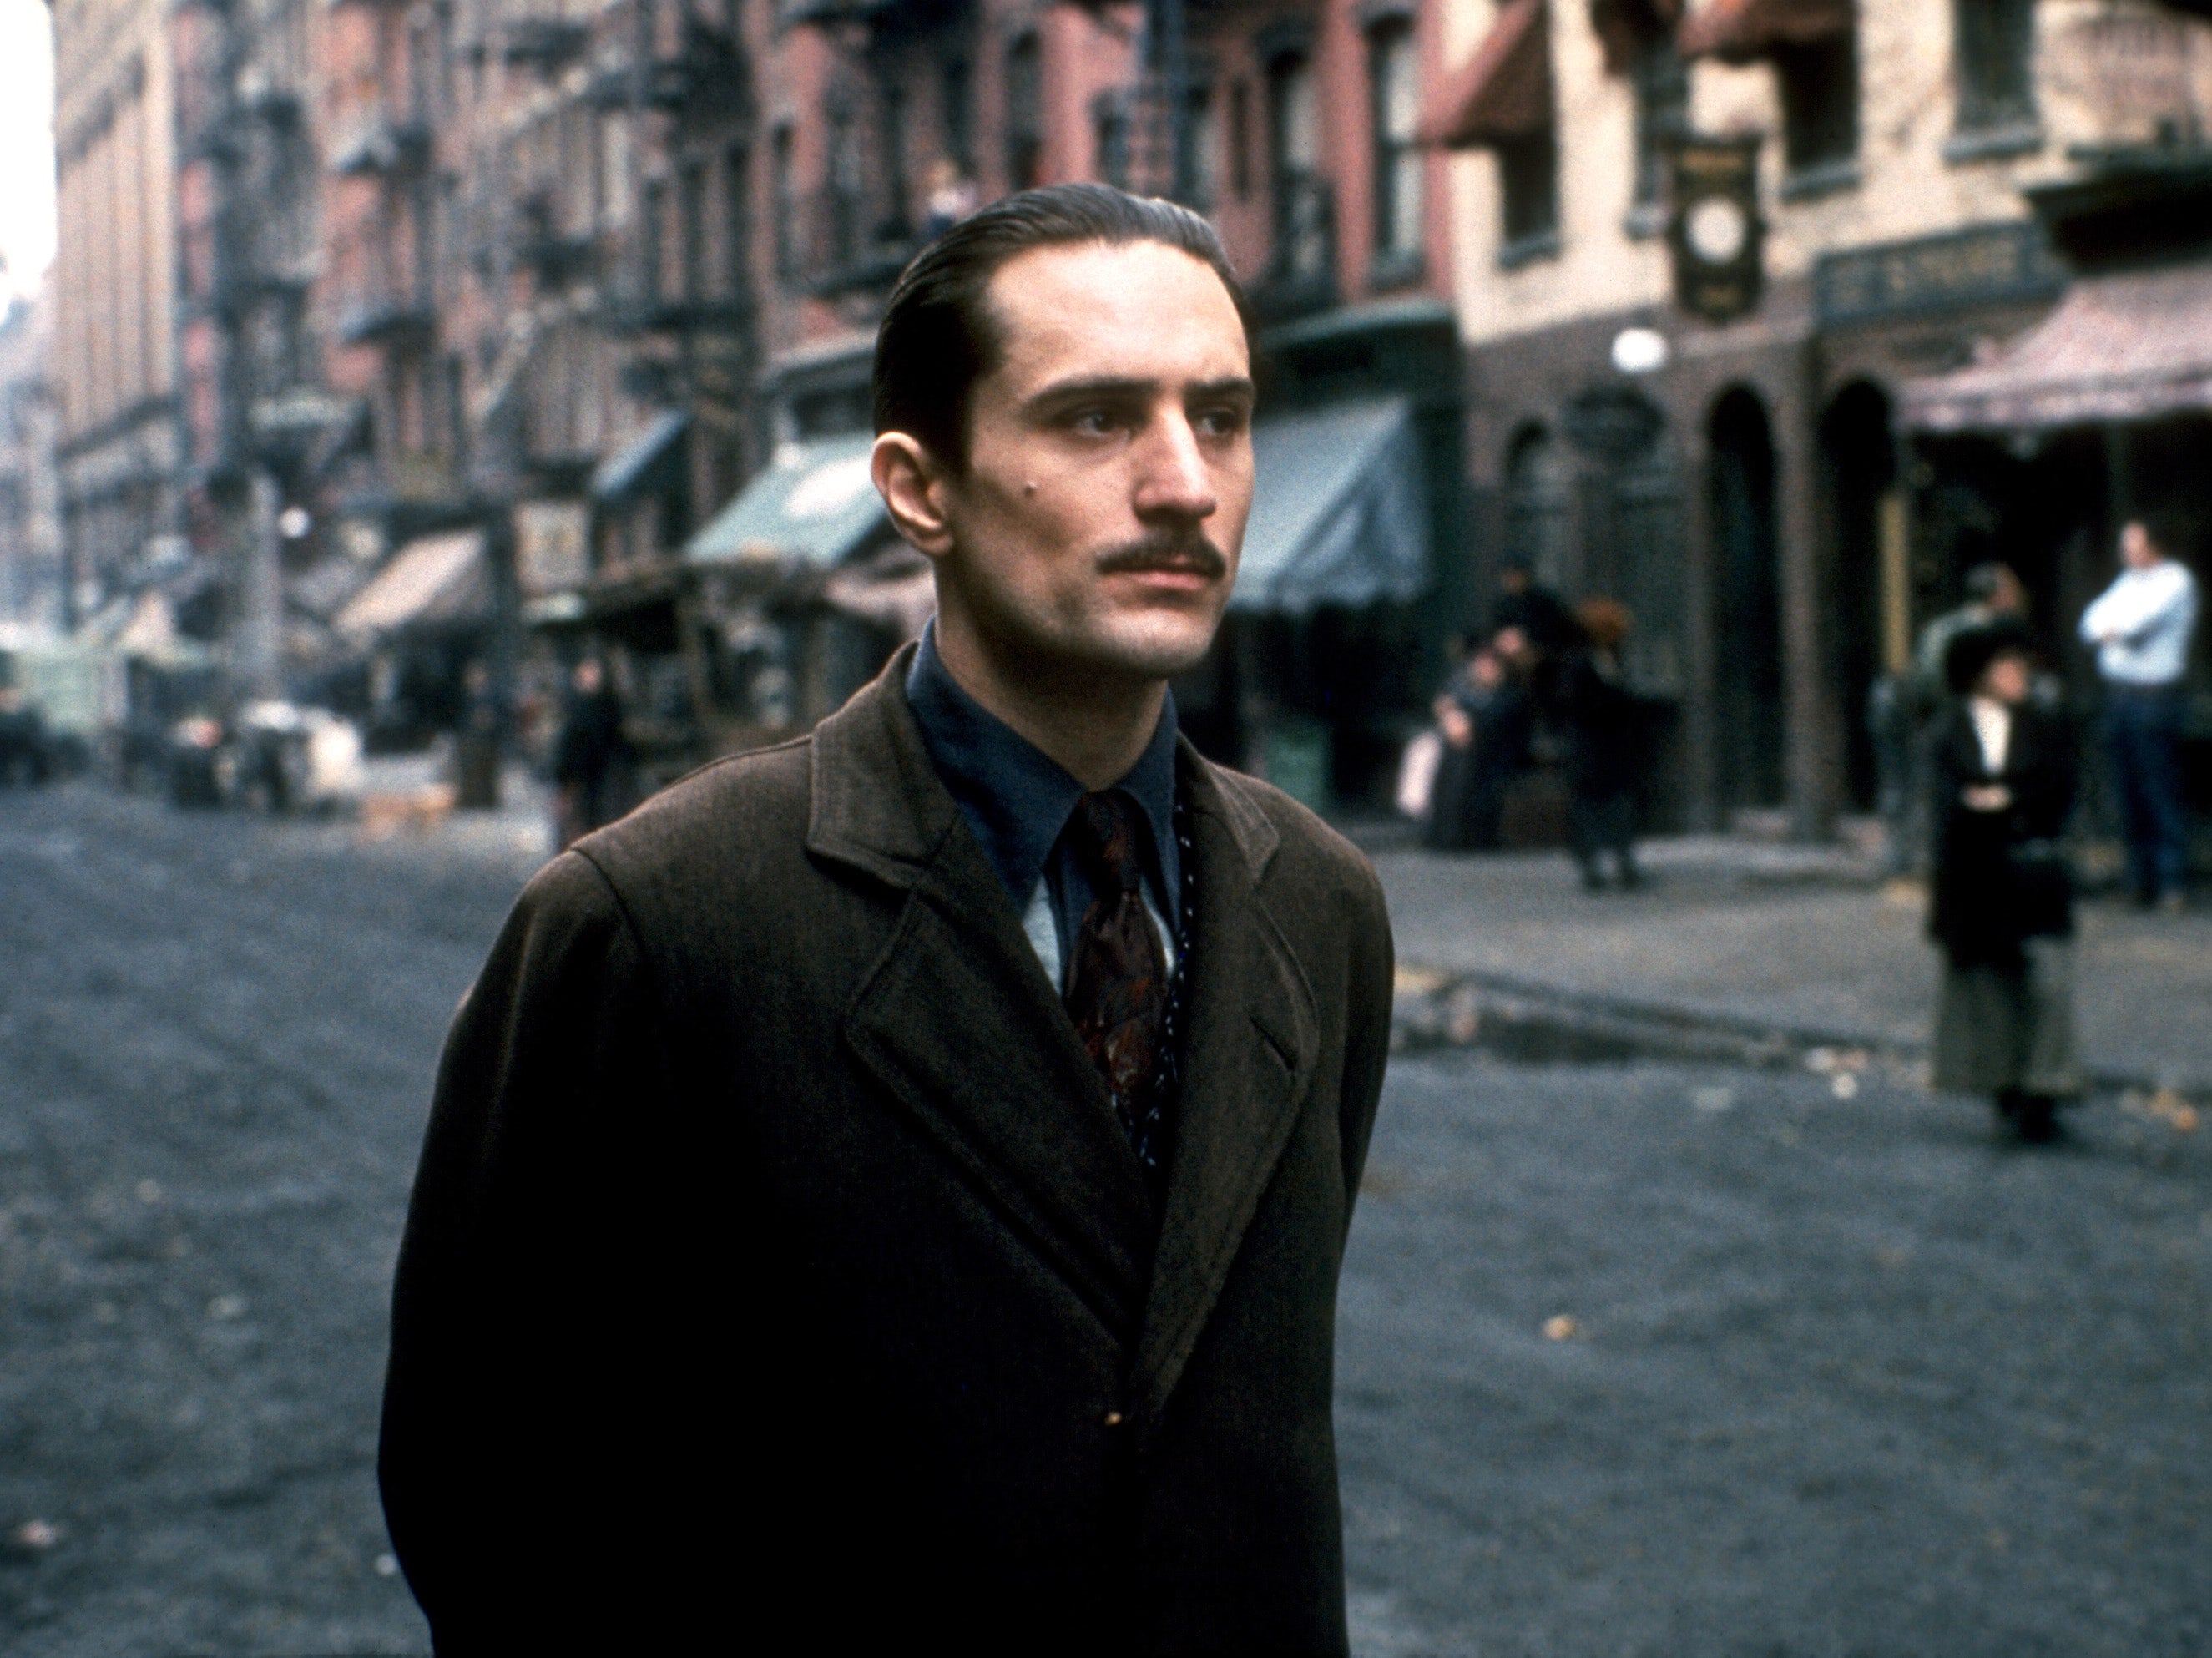 Robert De Niro as Vito Corleone in 'The Godfather Part II'